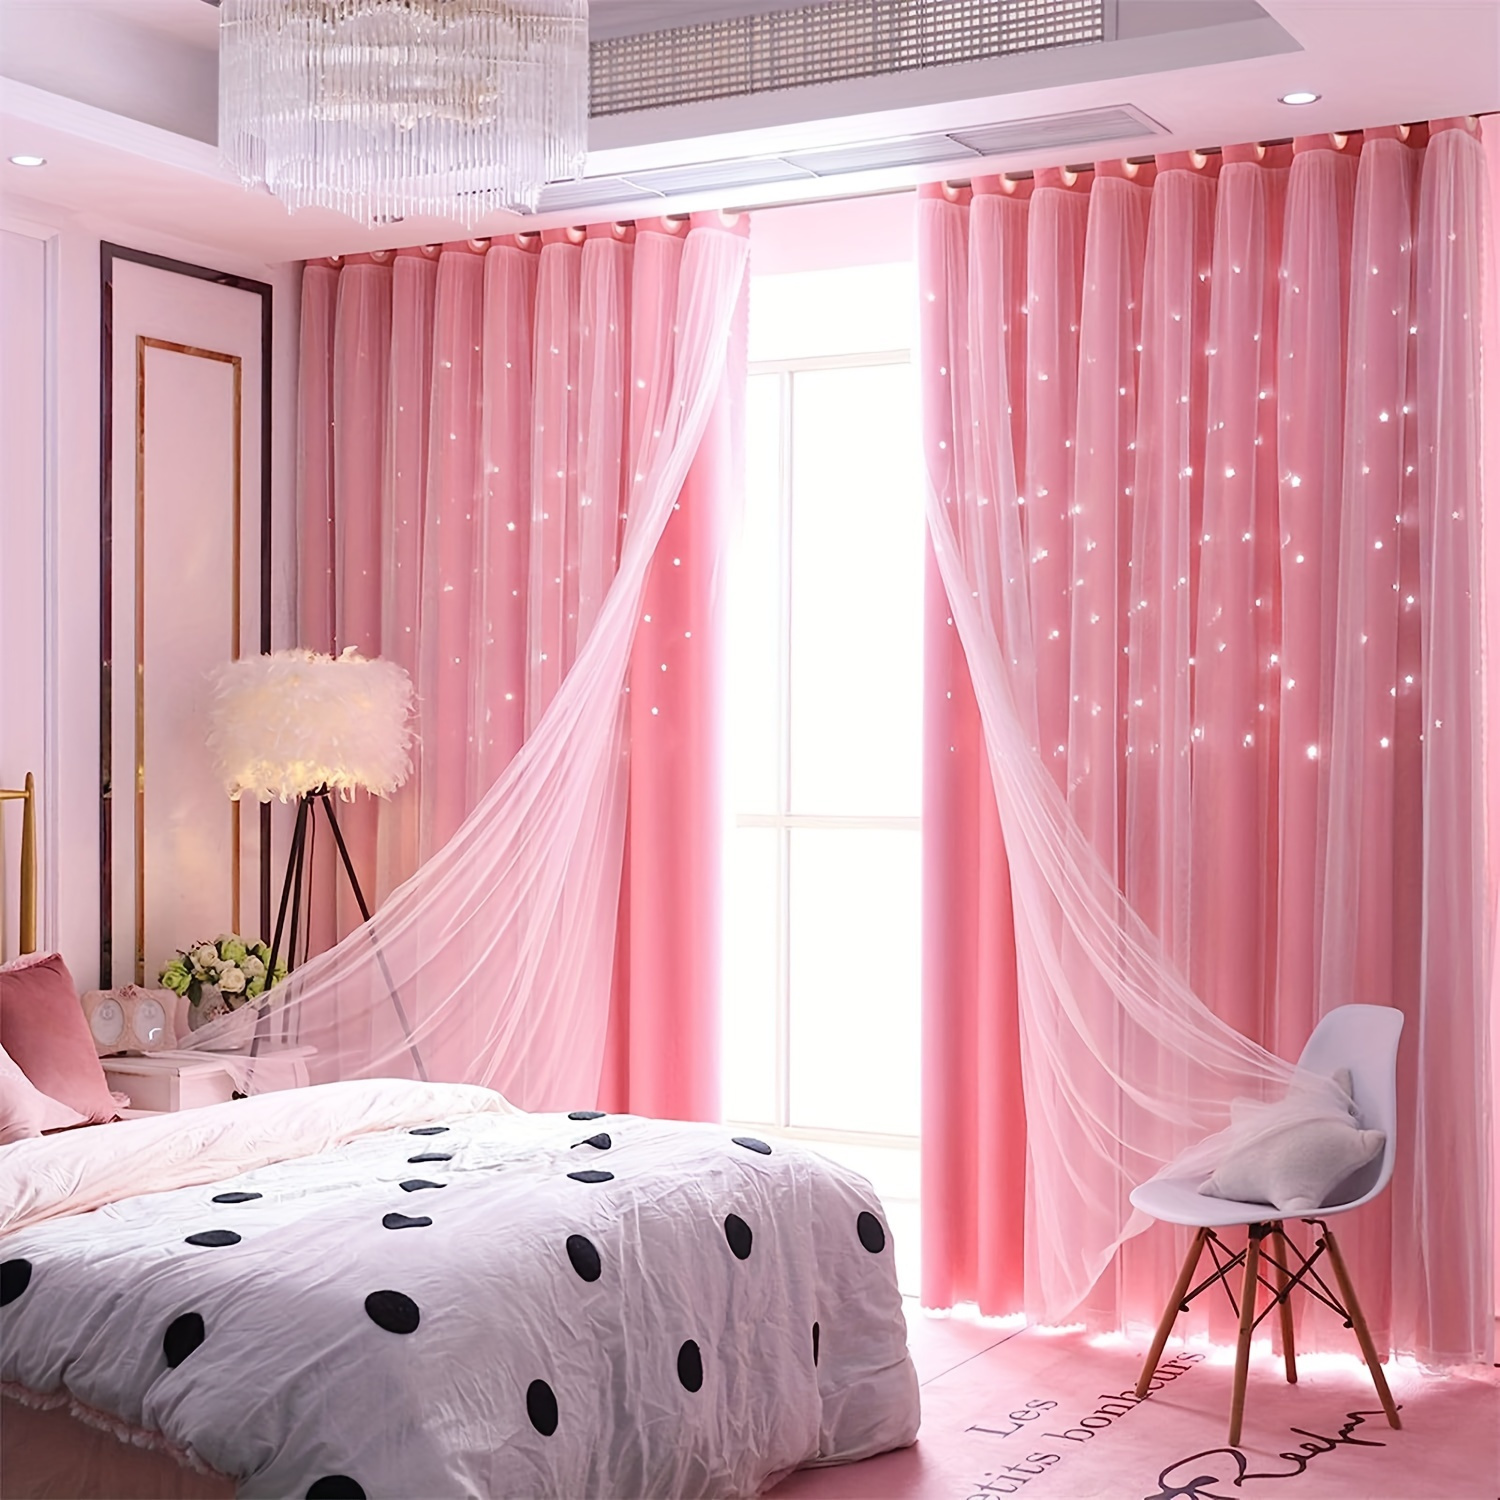  Cenefa de cortina de encaje para ventanas de cocina, puerta,  cenefa transparente con diseño de mariposa para habitación de niñas,  bolsillo para barra, cortinas cortas bordadas florales para baño, sala 